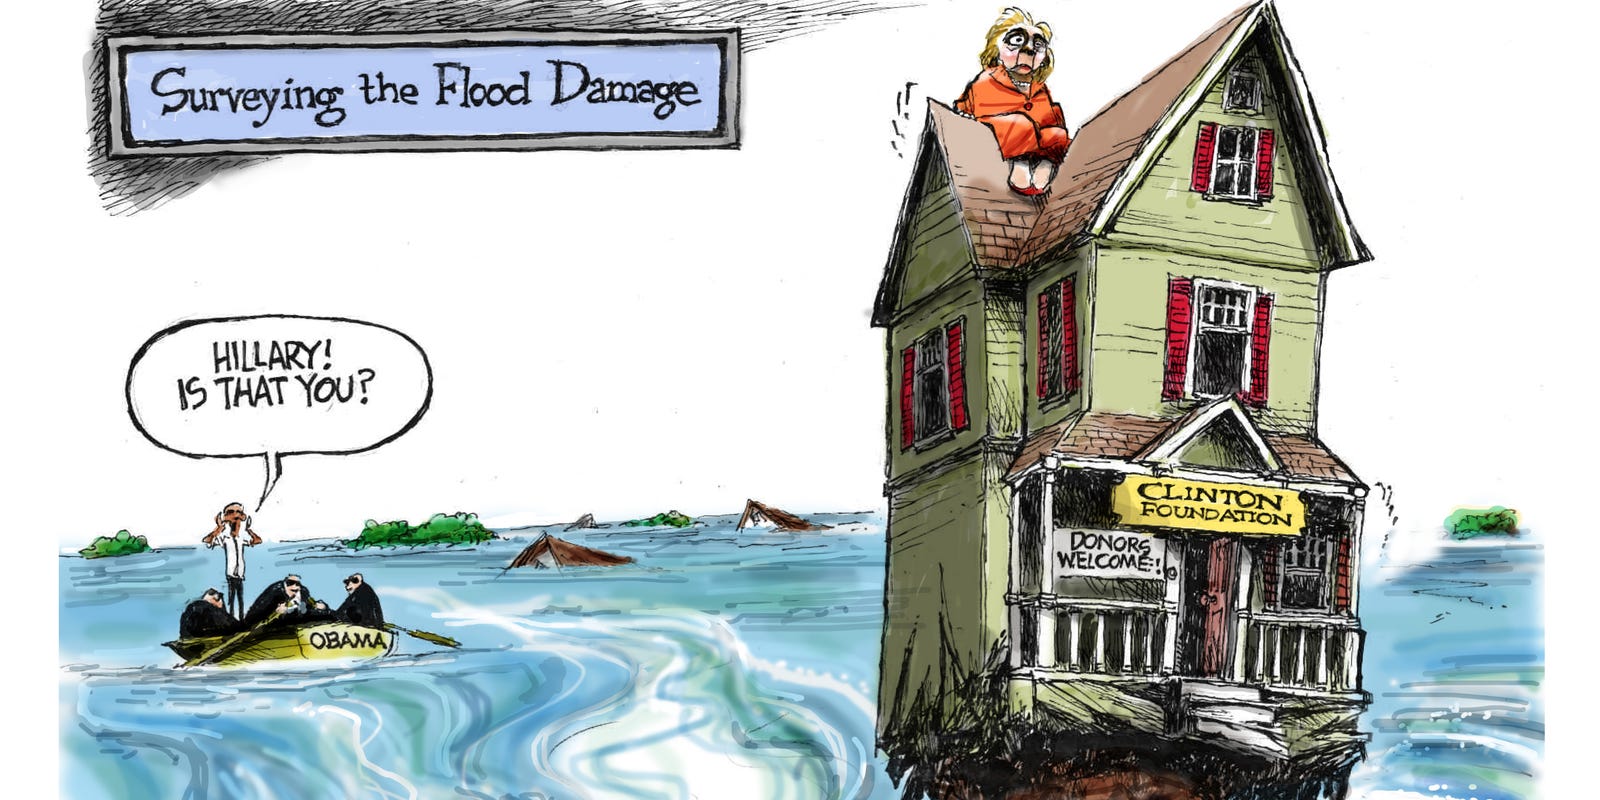 Benson: Hillary Clinton surveys flood damage